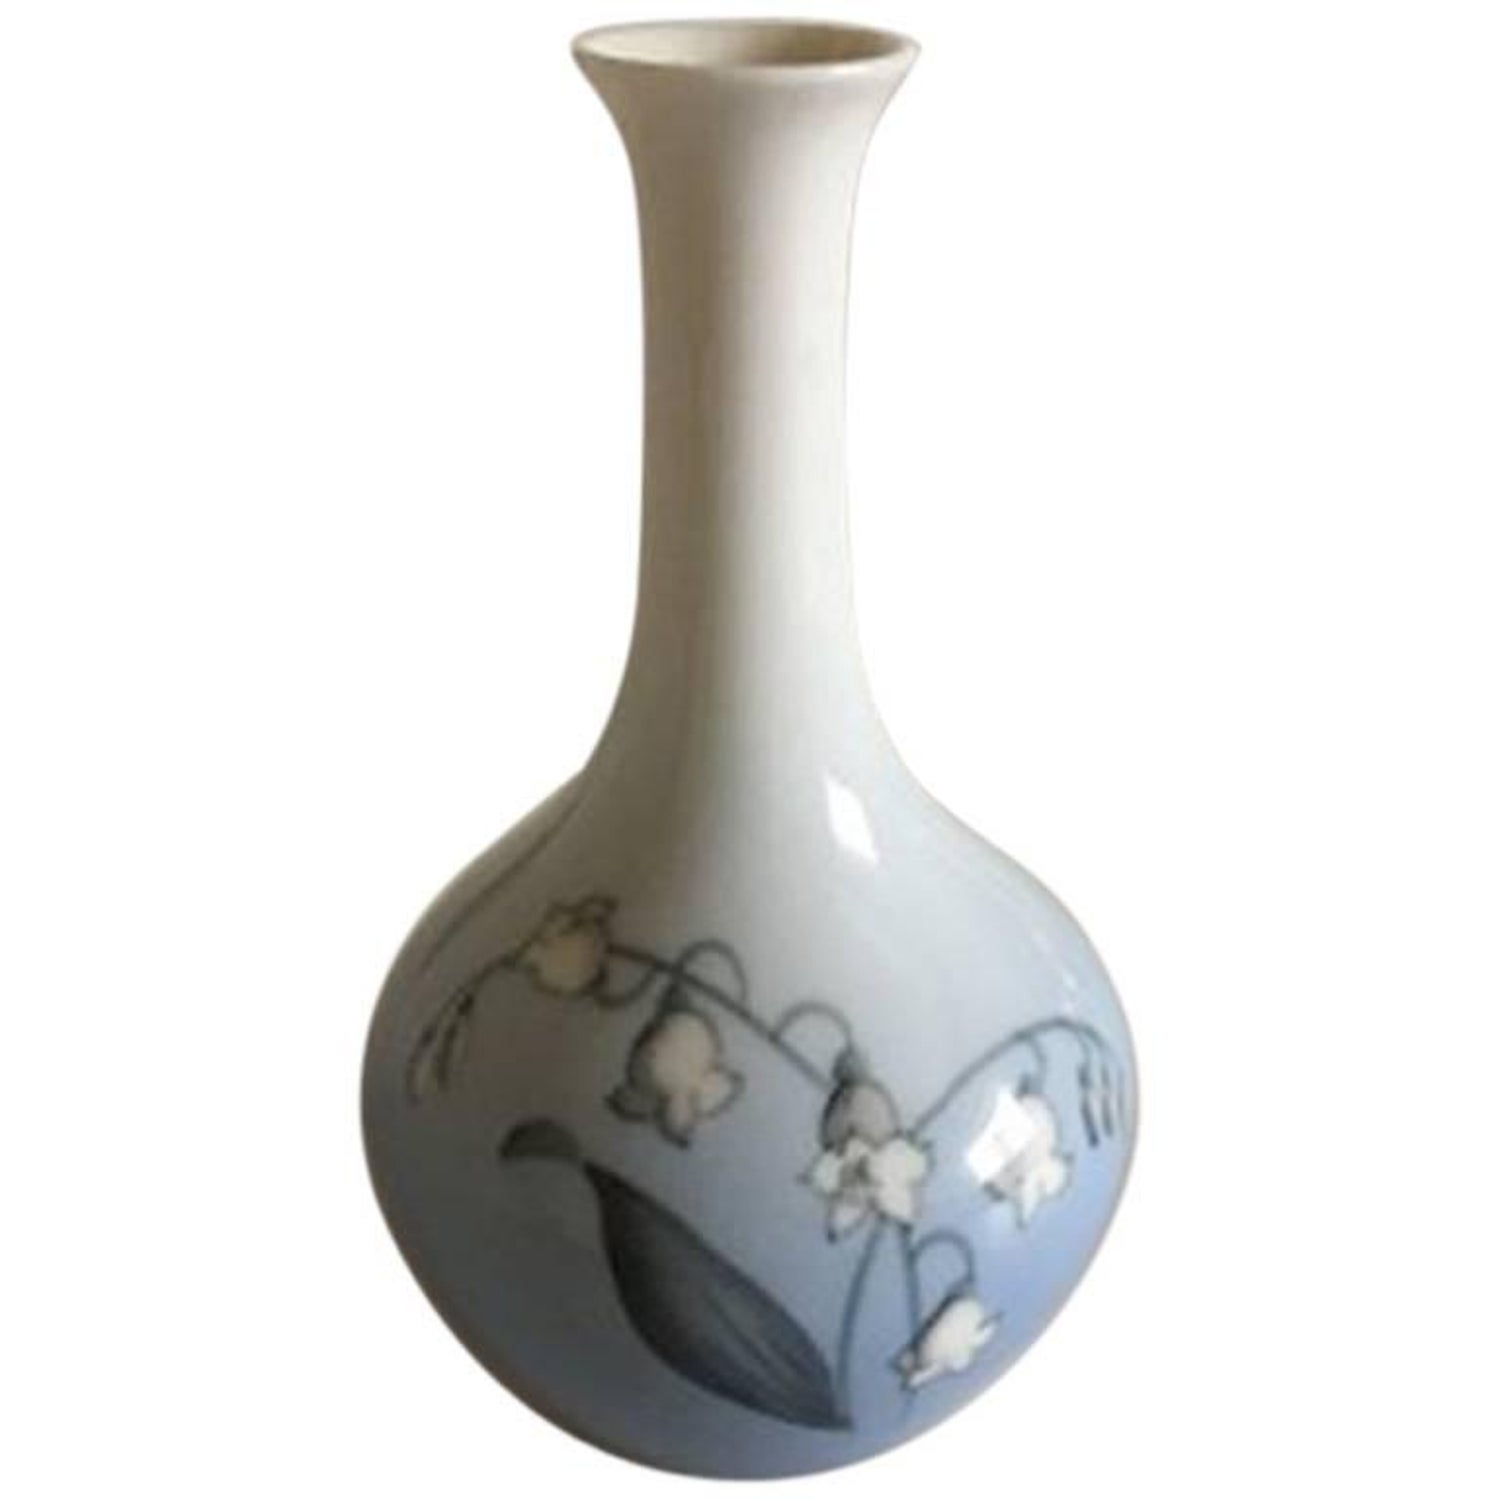 Bing and Grondahl Art Nouveau Vase 57/143 For Sale at 1stDibs